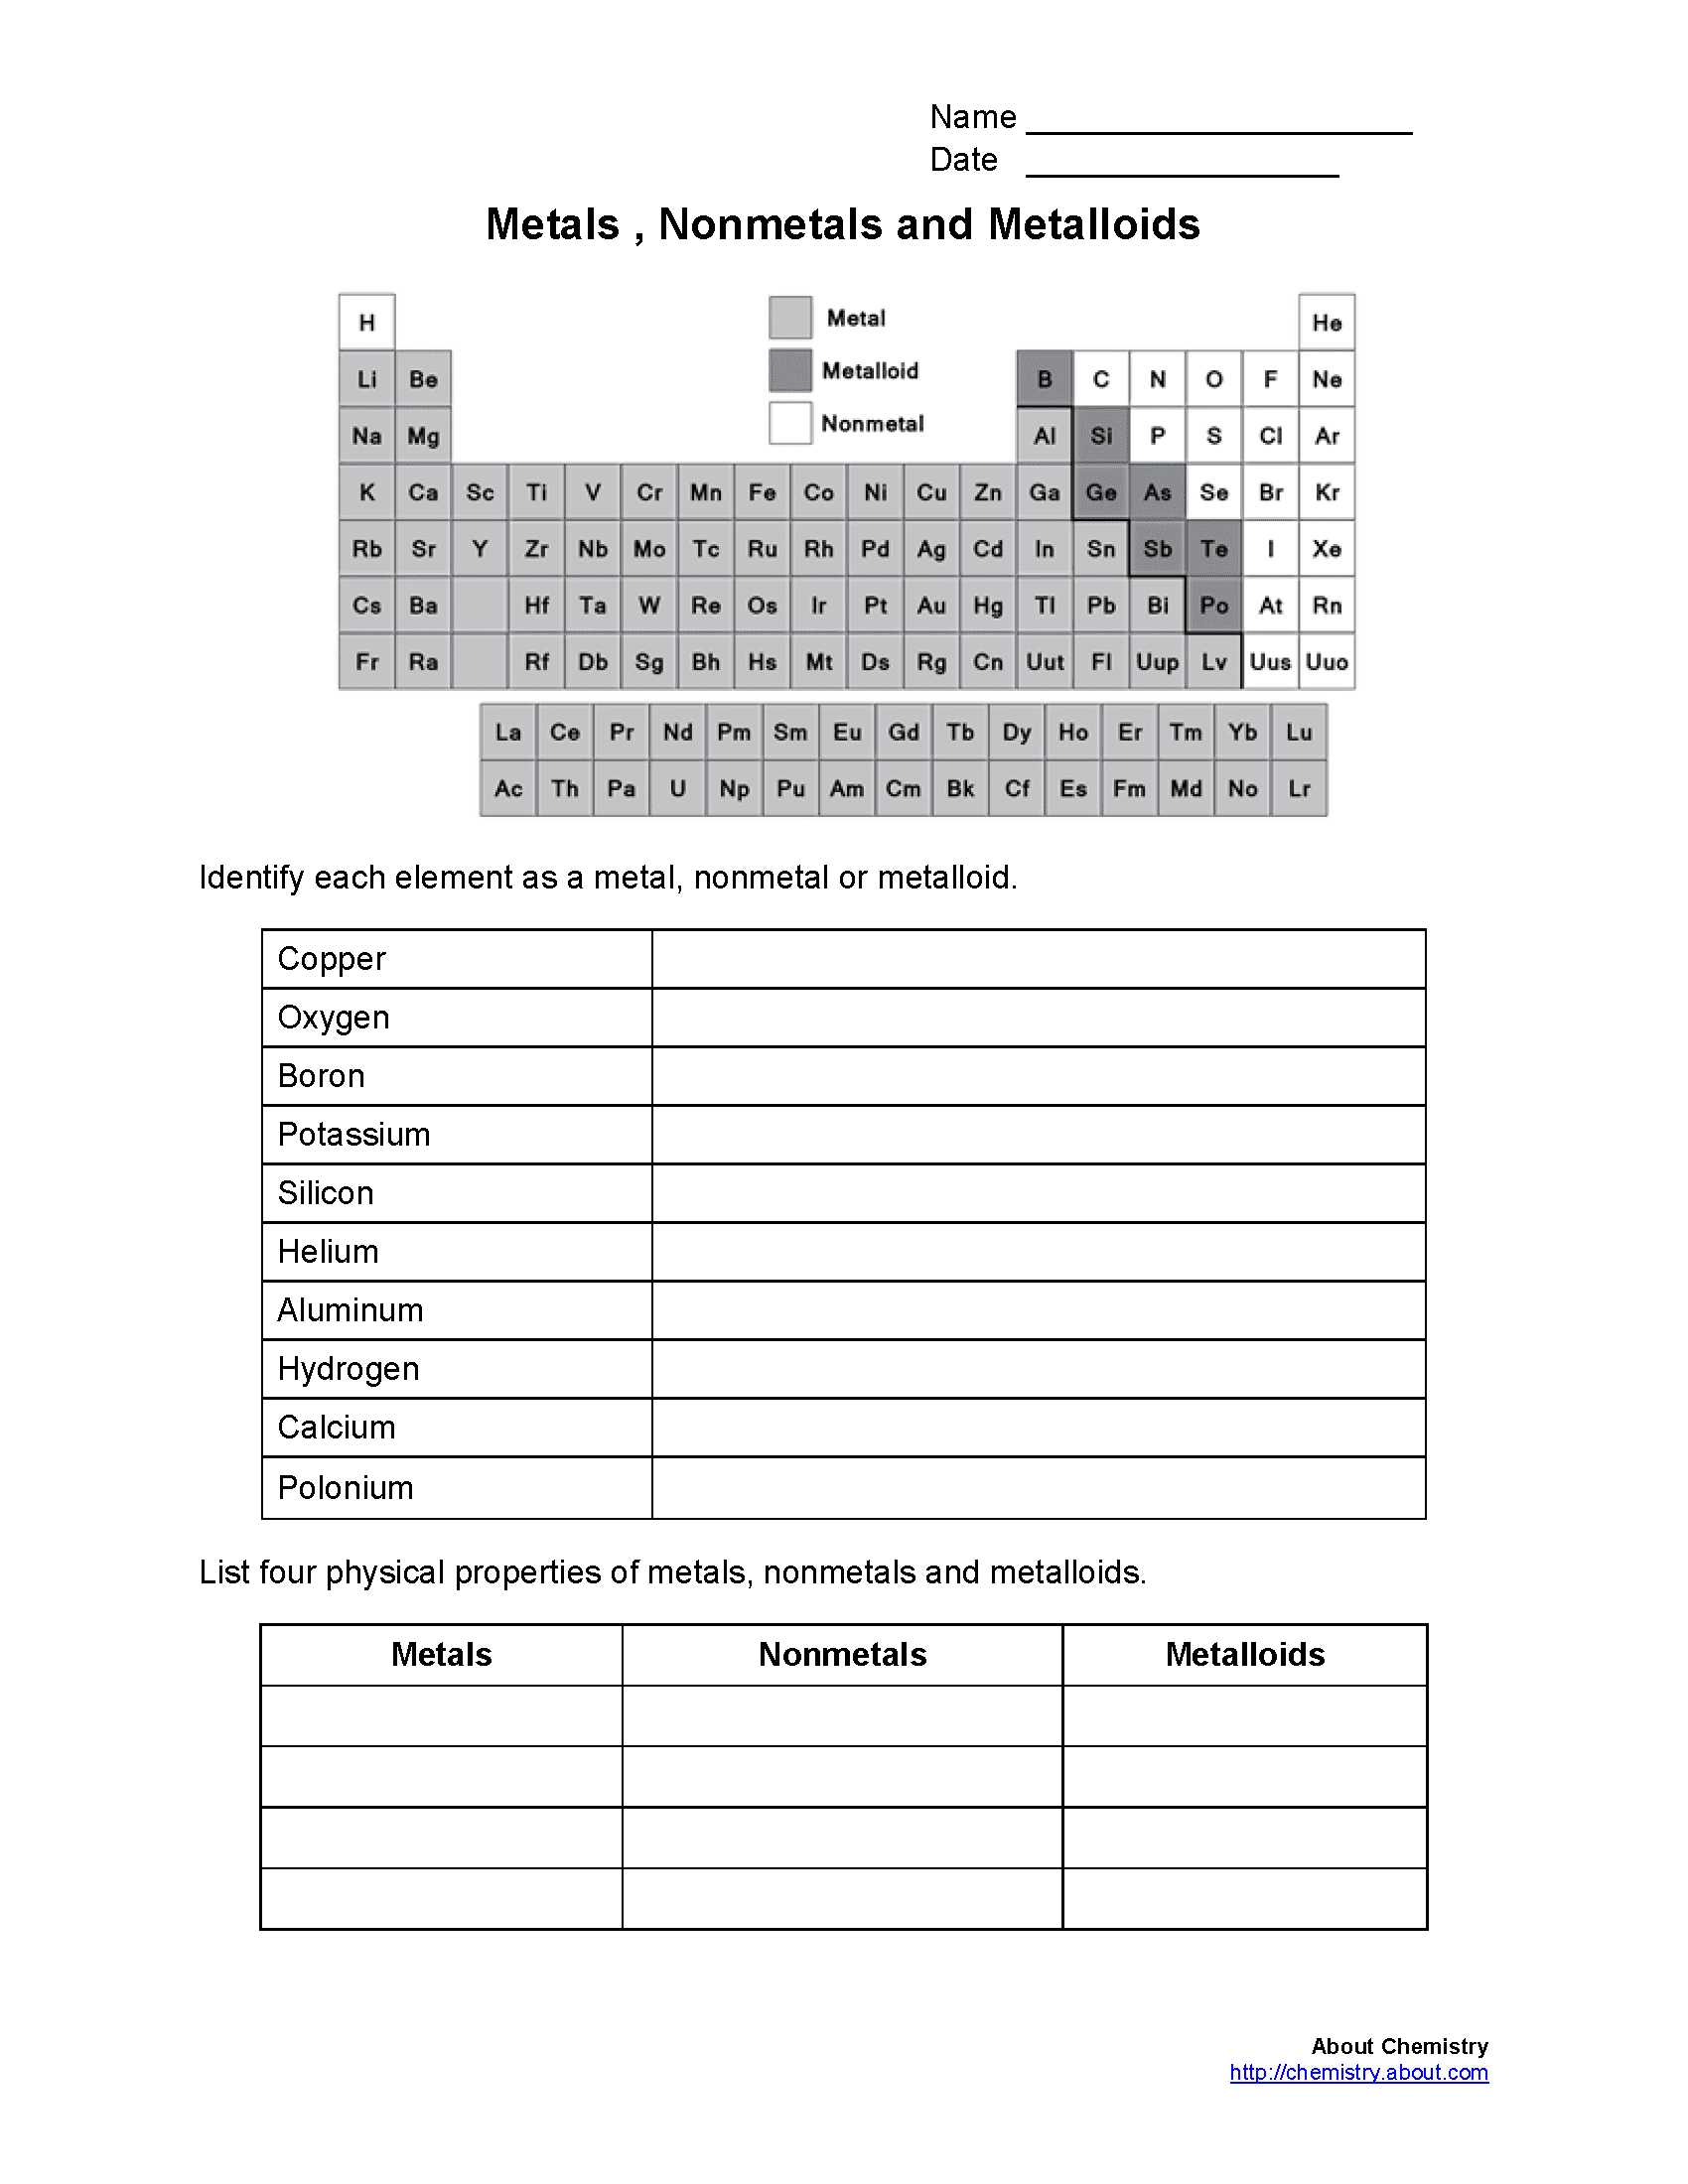 Calculating Power Worksheet Answer Key or Metals Nonmetals Metalloids Worksheet